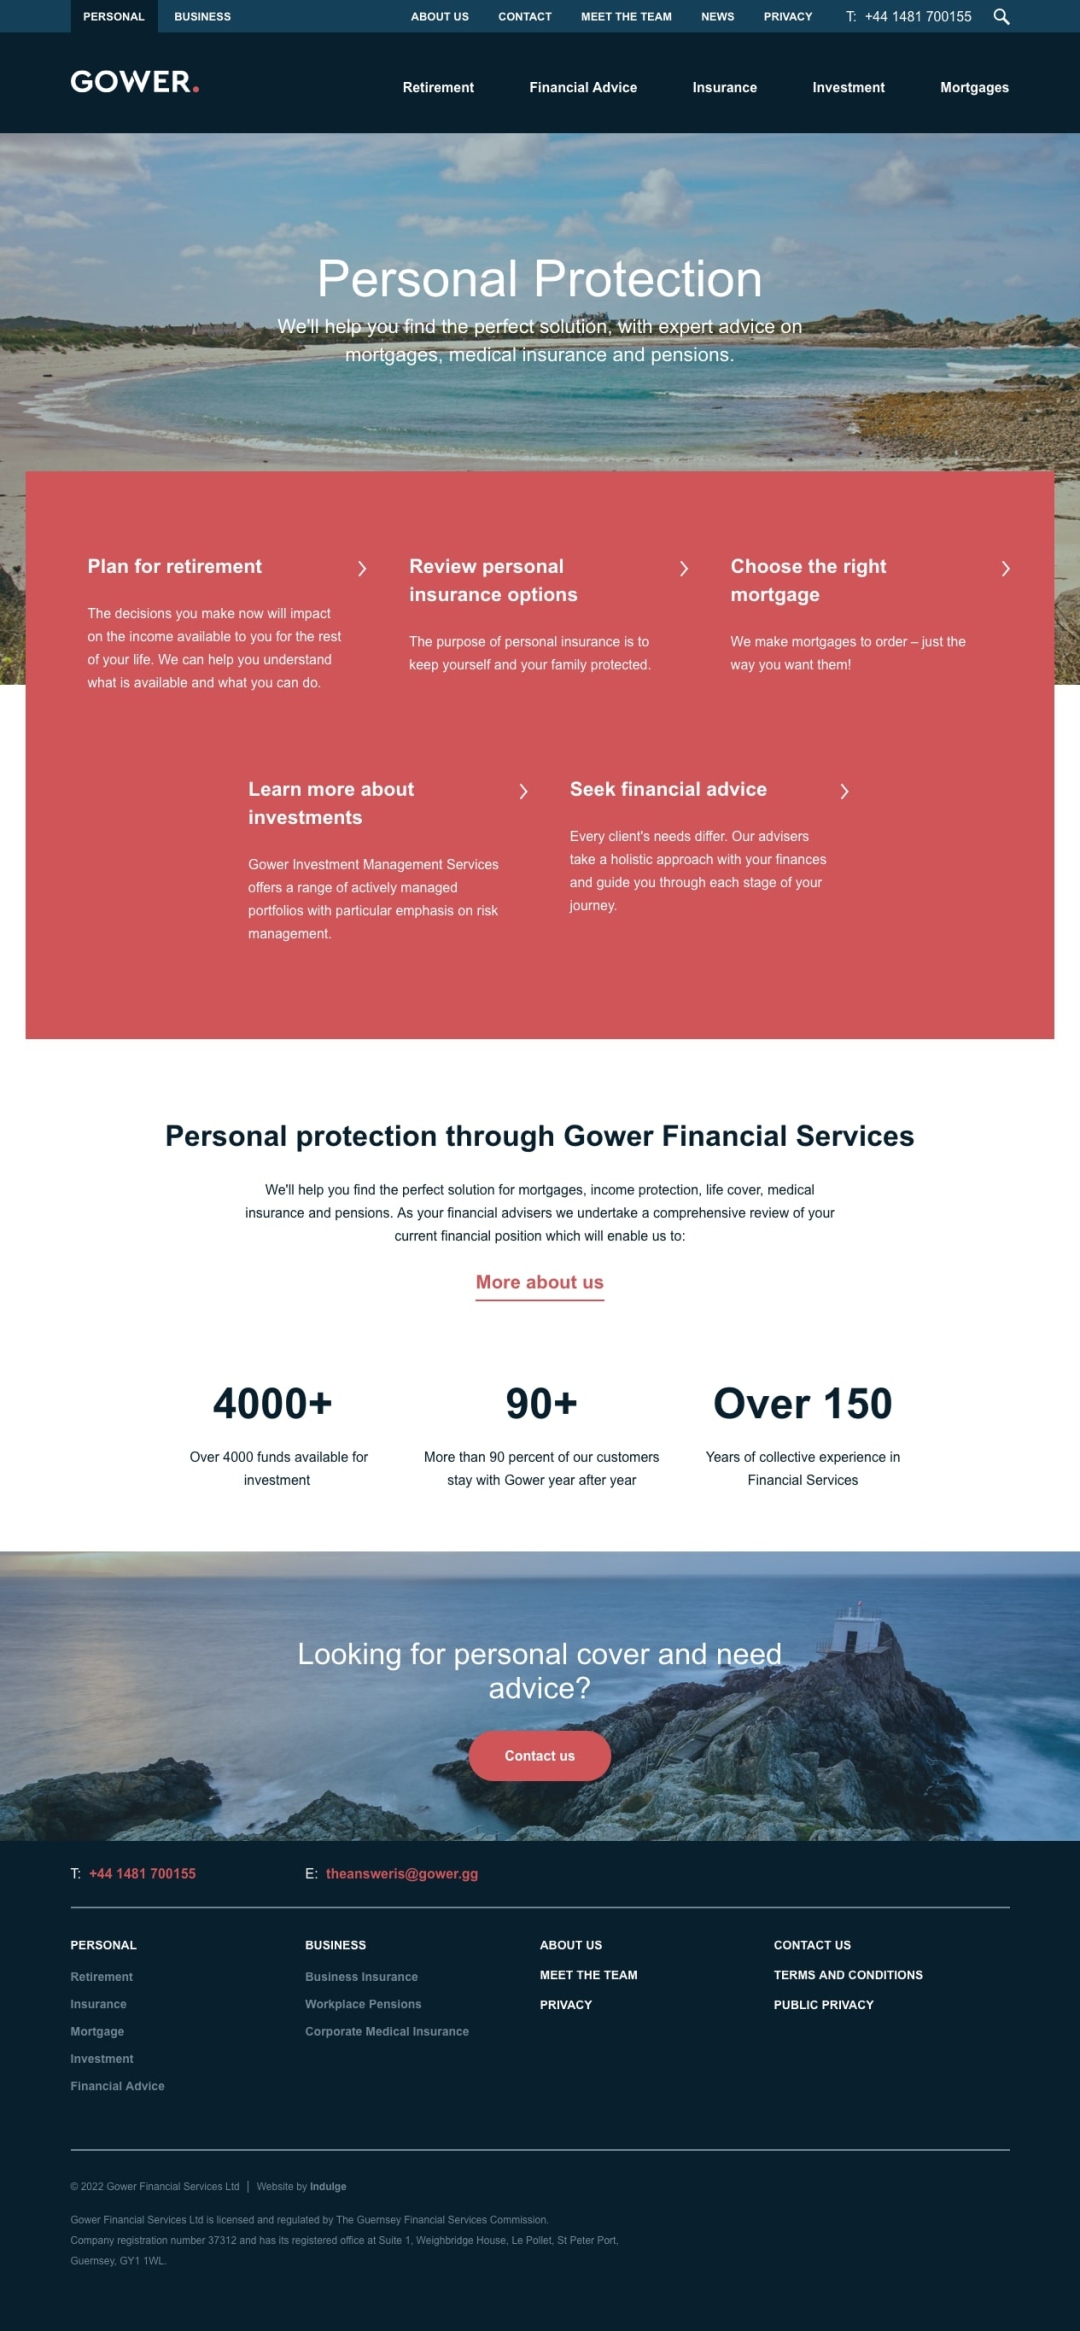 Gower Financial Services website homepage screenshot on desktop device